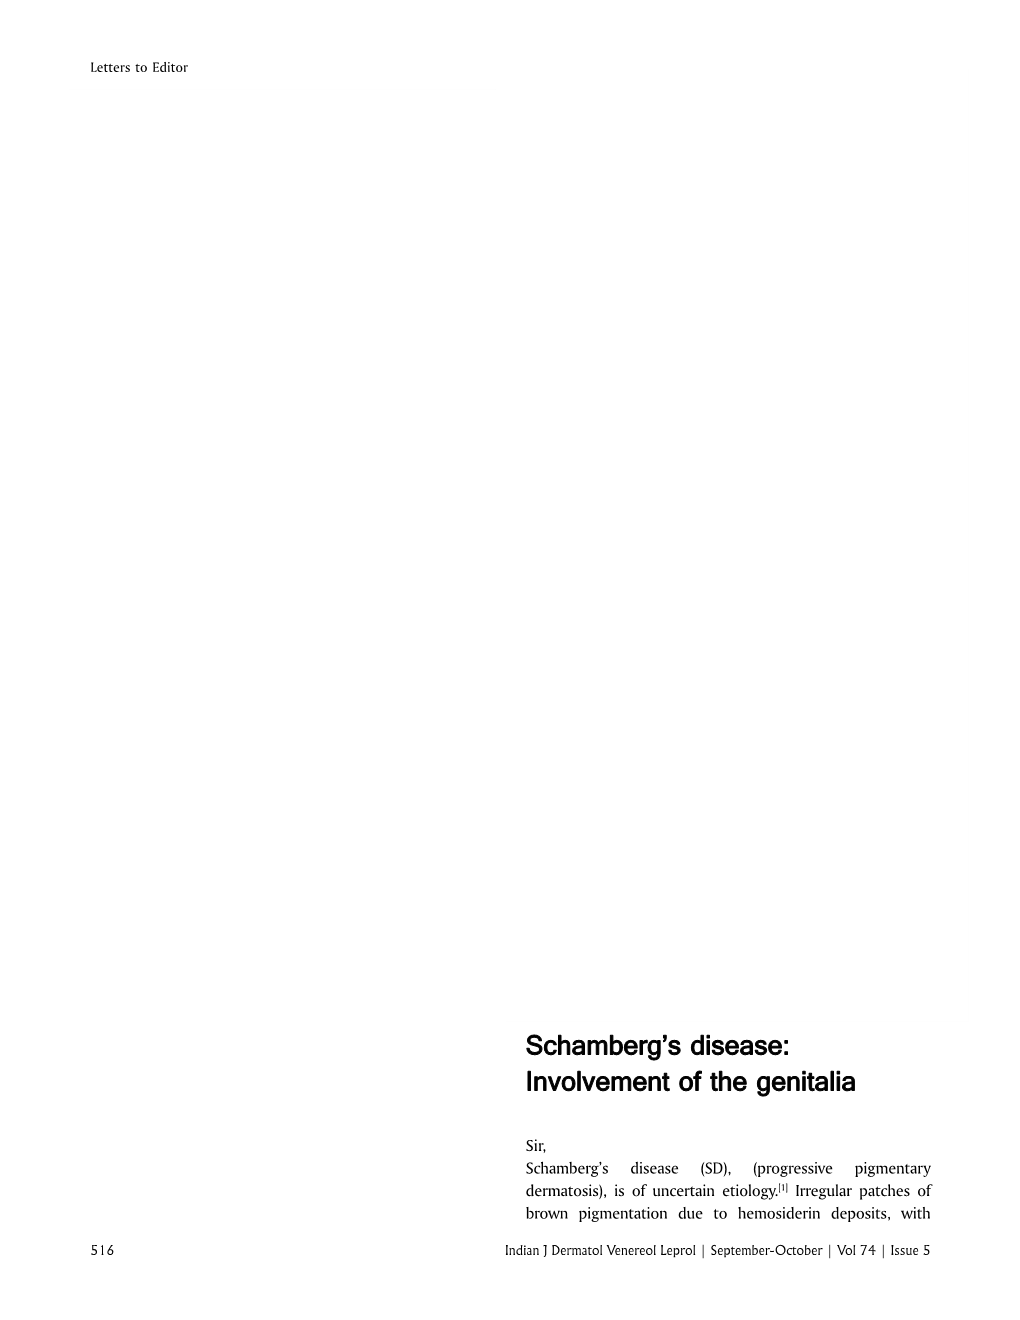 Schamberg's Disease: Involvement of the Genitalia